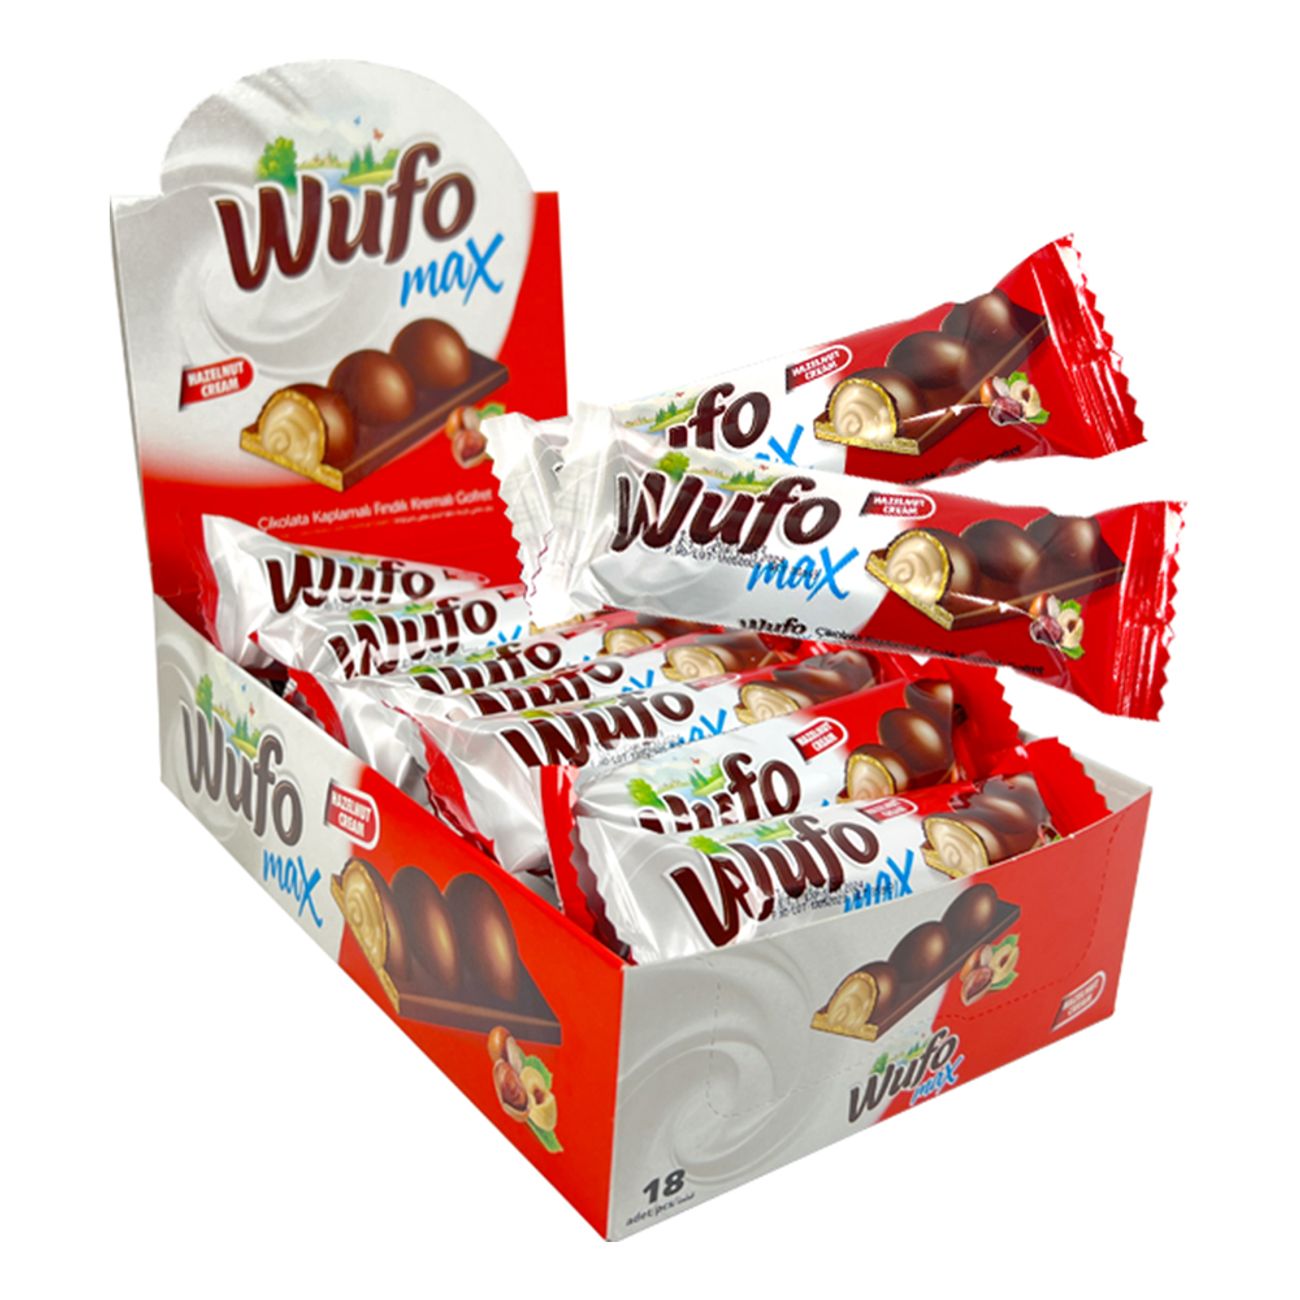 wufo-max-hazelnut-cream-storpack-96510-2